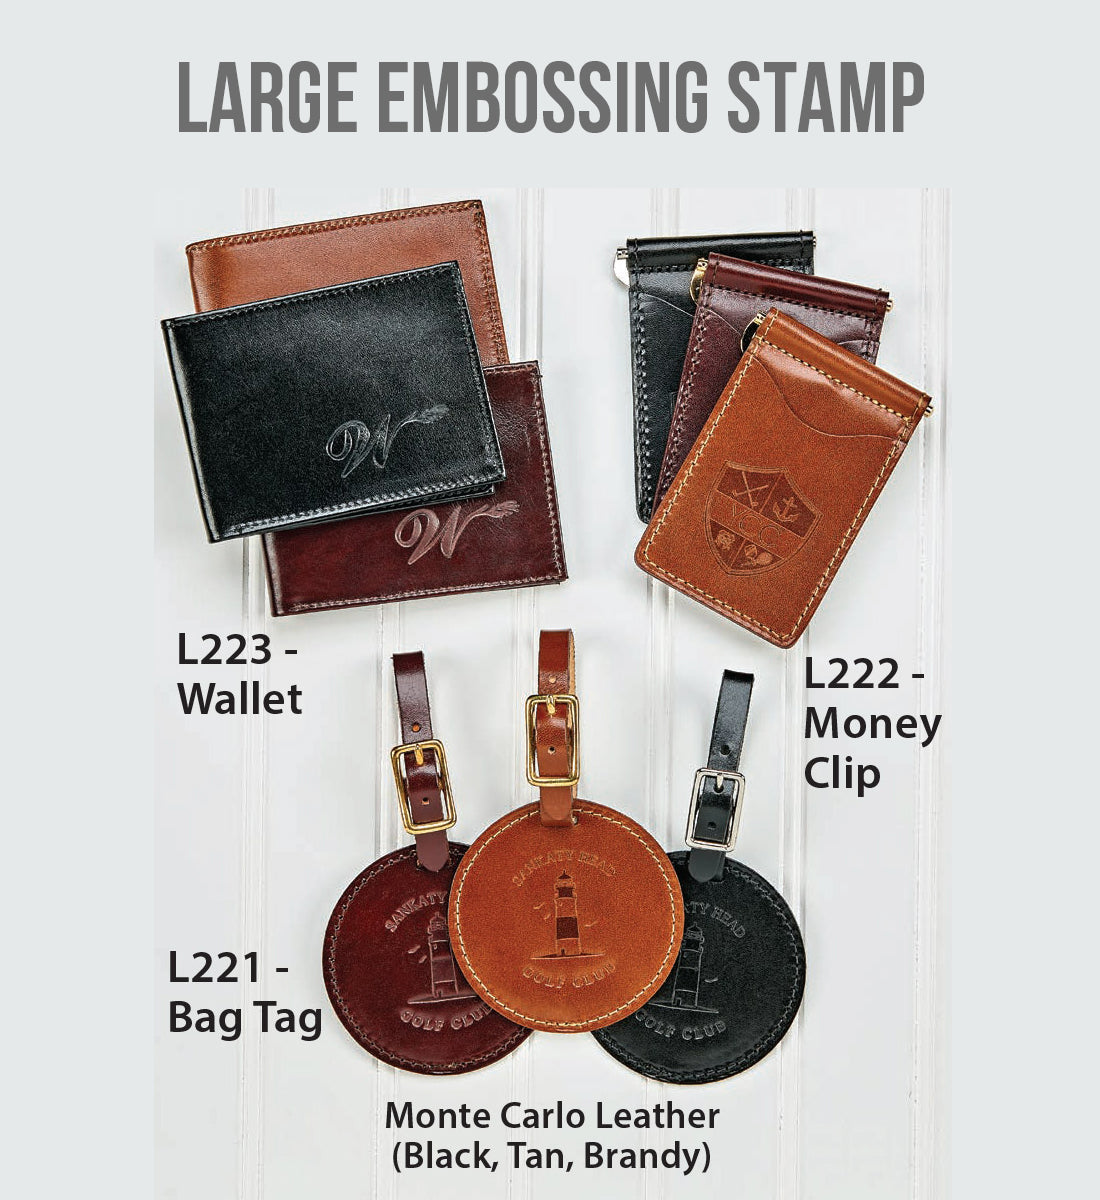 300g Personalized Embosser Stamp - Large Custom Paper Embosser logo Seal  notary